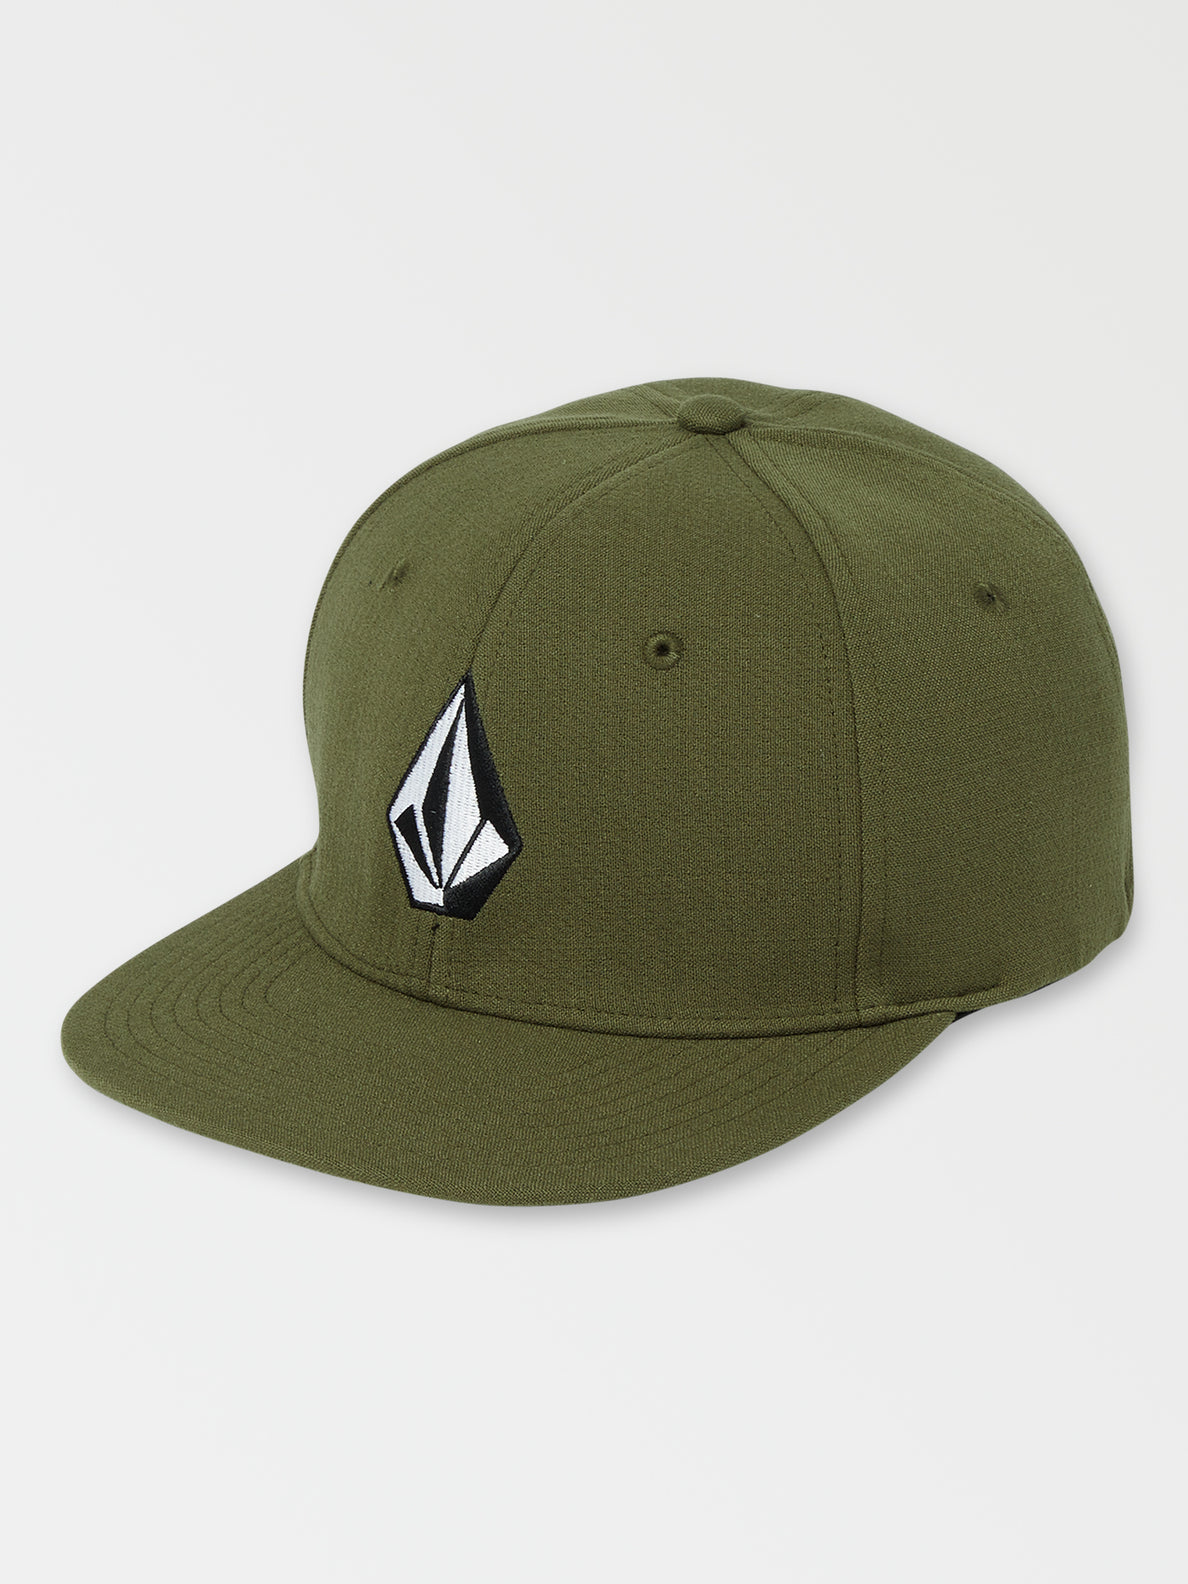 V-Full Stone Xfit 2 Hat - Military